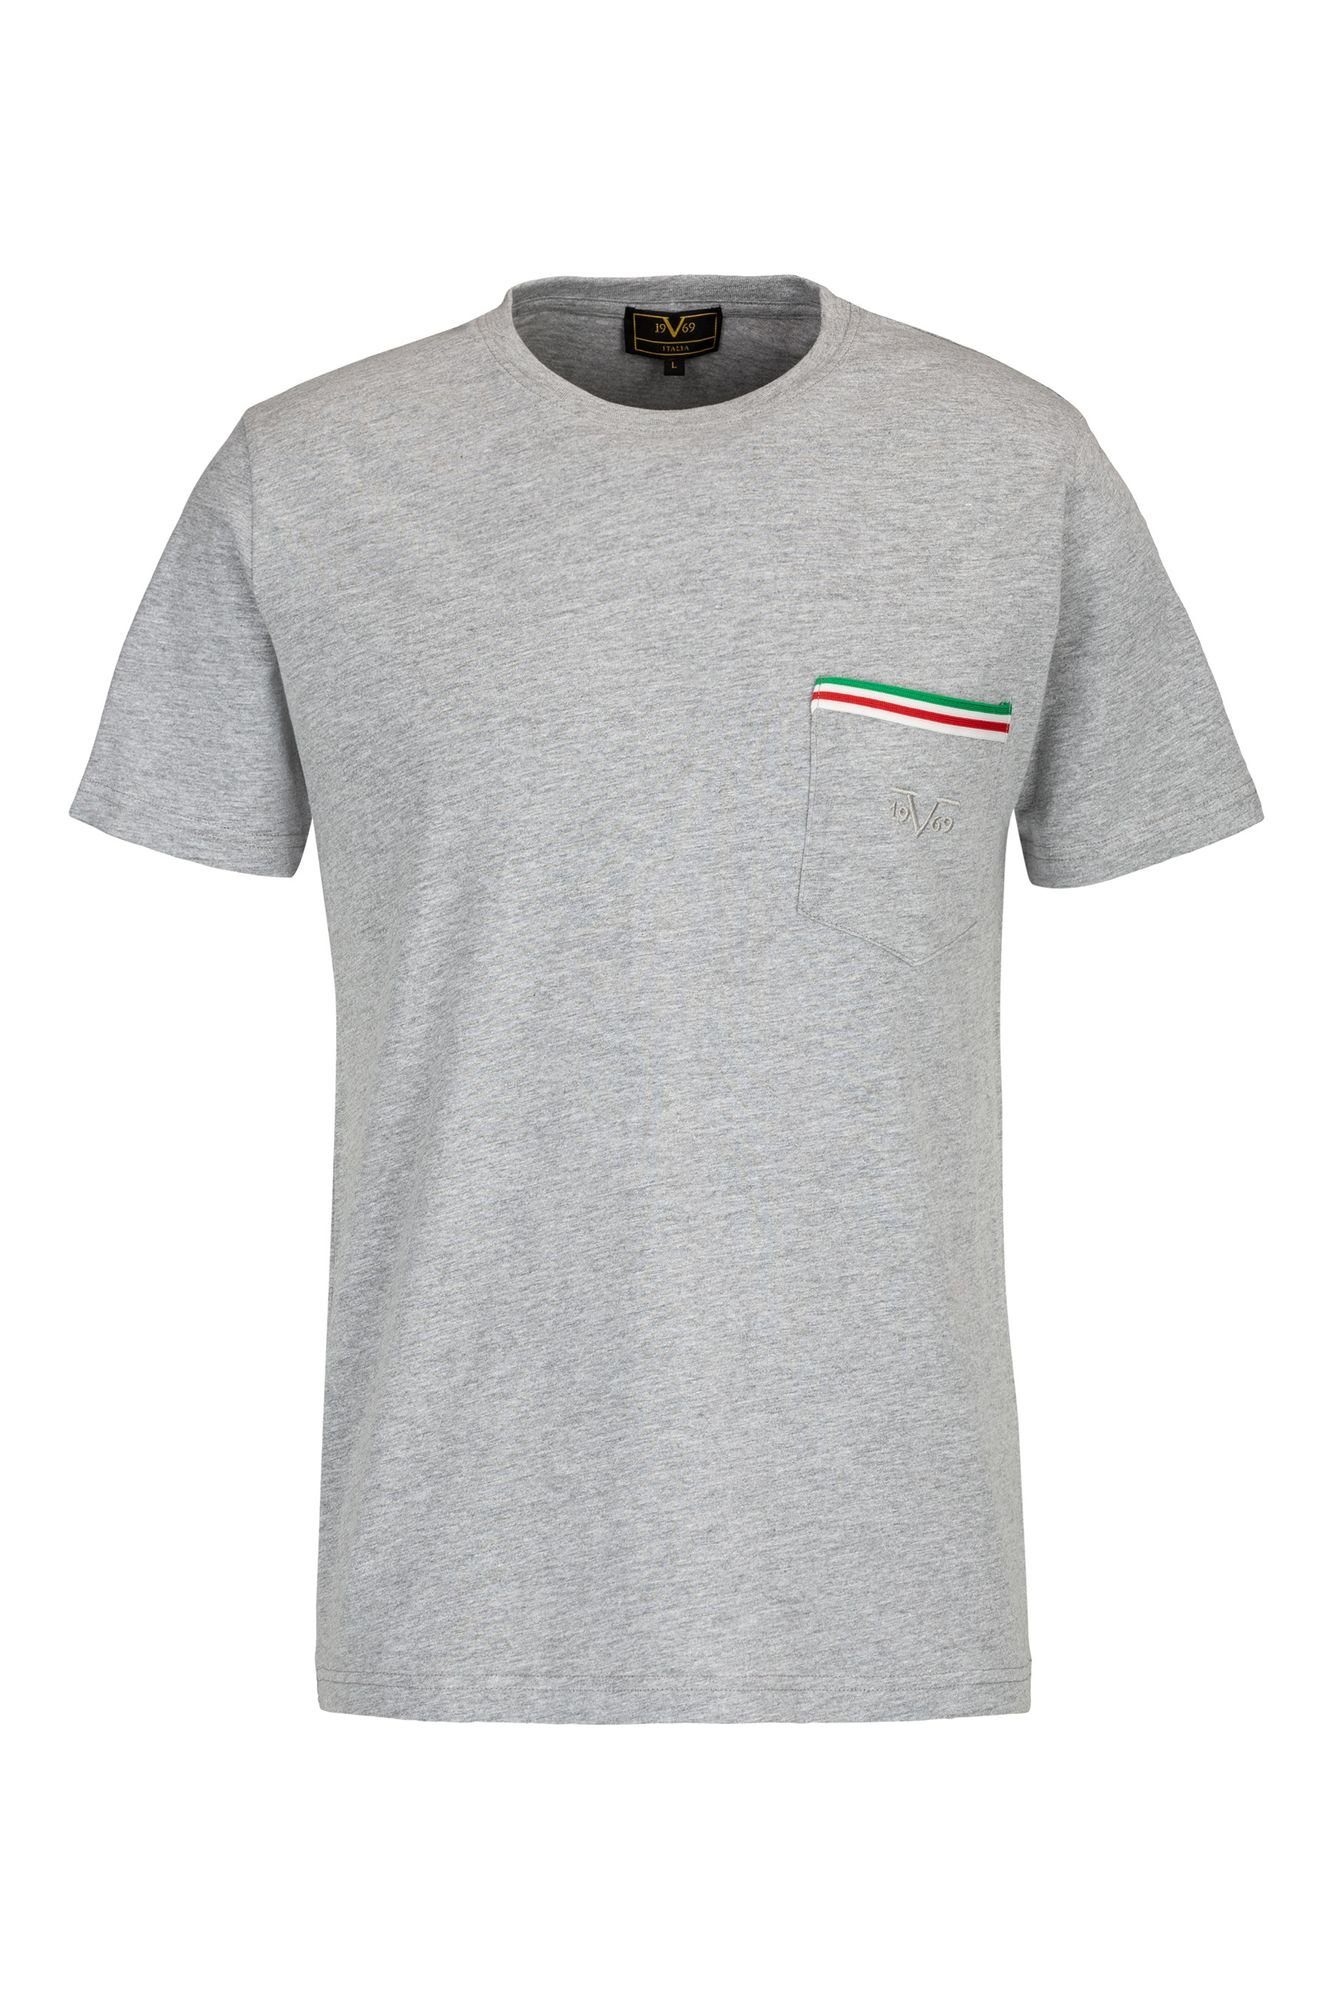 19V69 by Federico Versace T-Shirt Italia